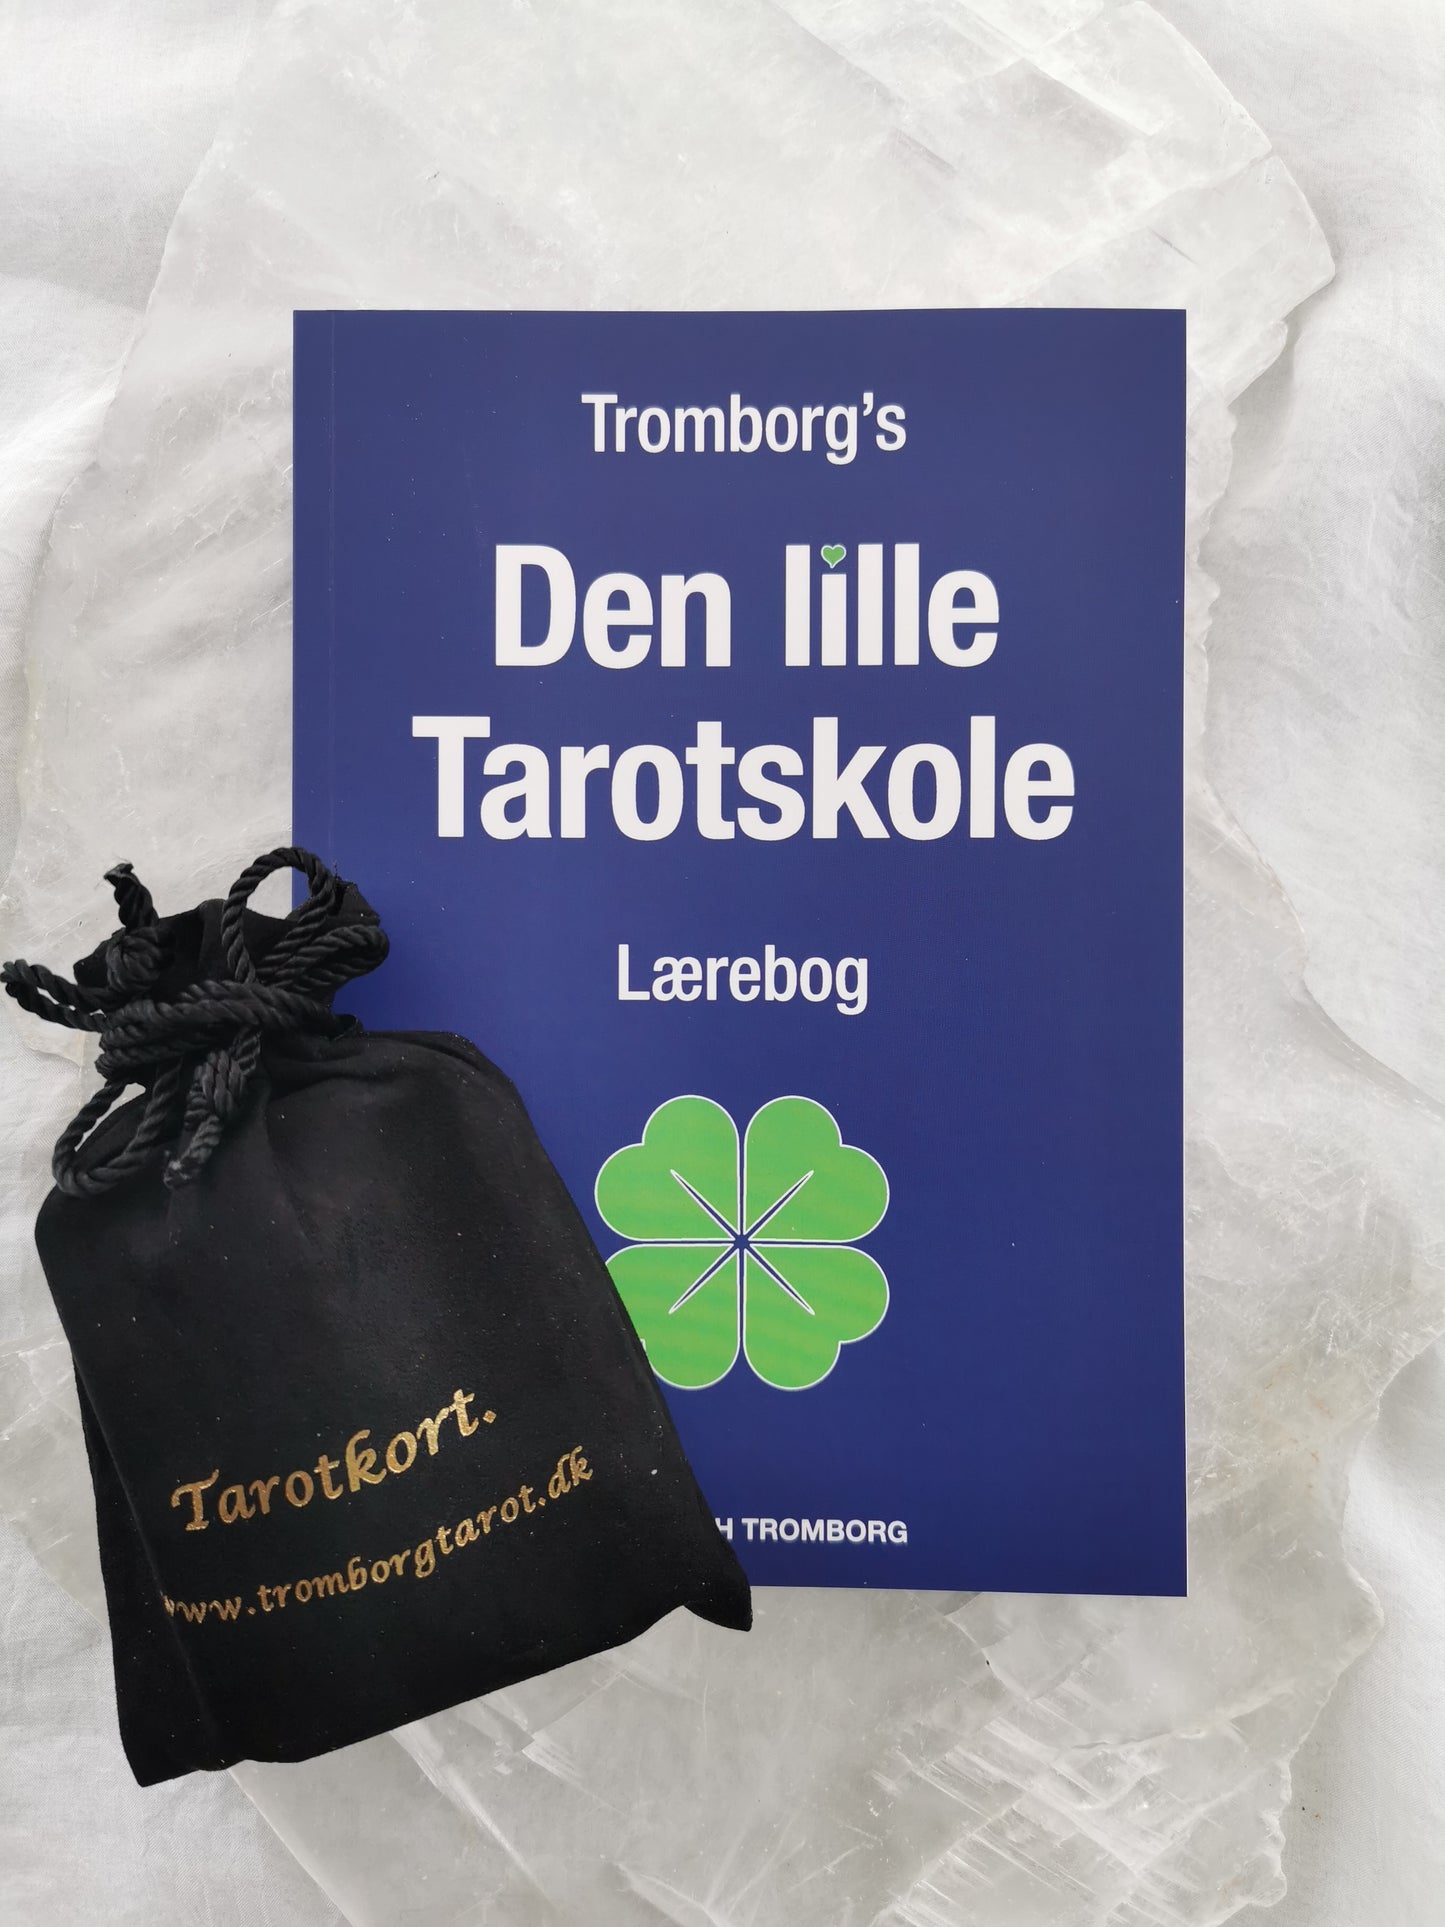 Tarot set: 'Tarot card' and 'Tromborg's Little Tarot School - Textbook' by Birgith Tromborg